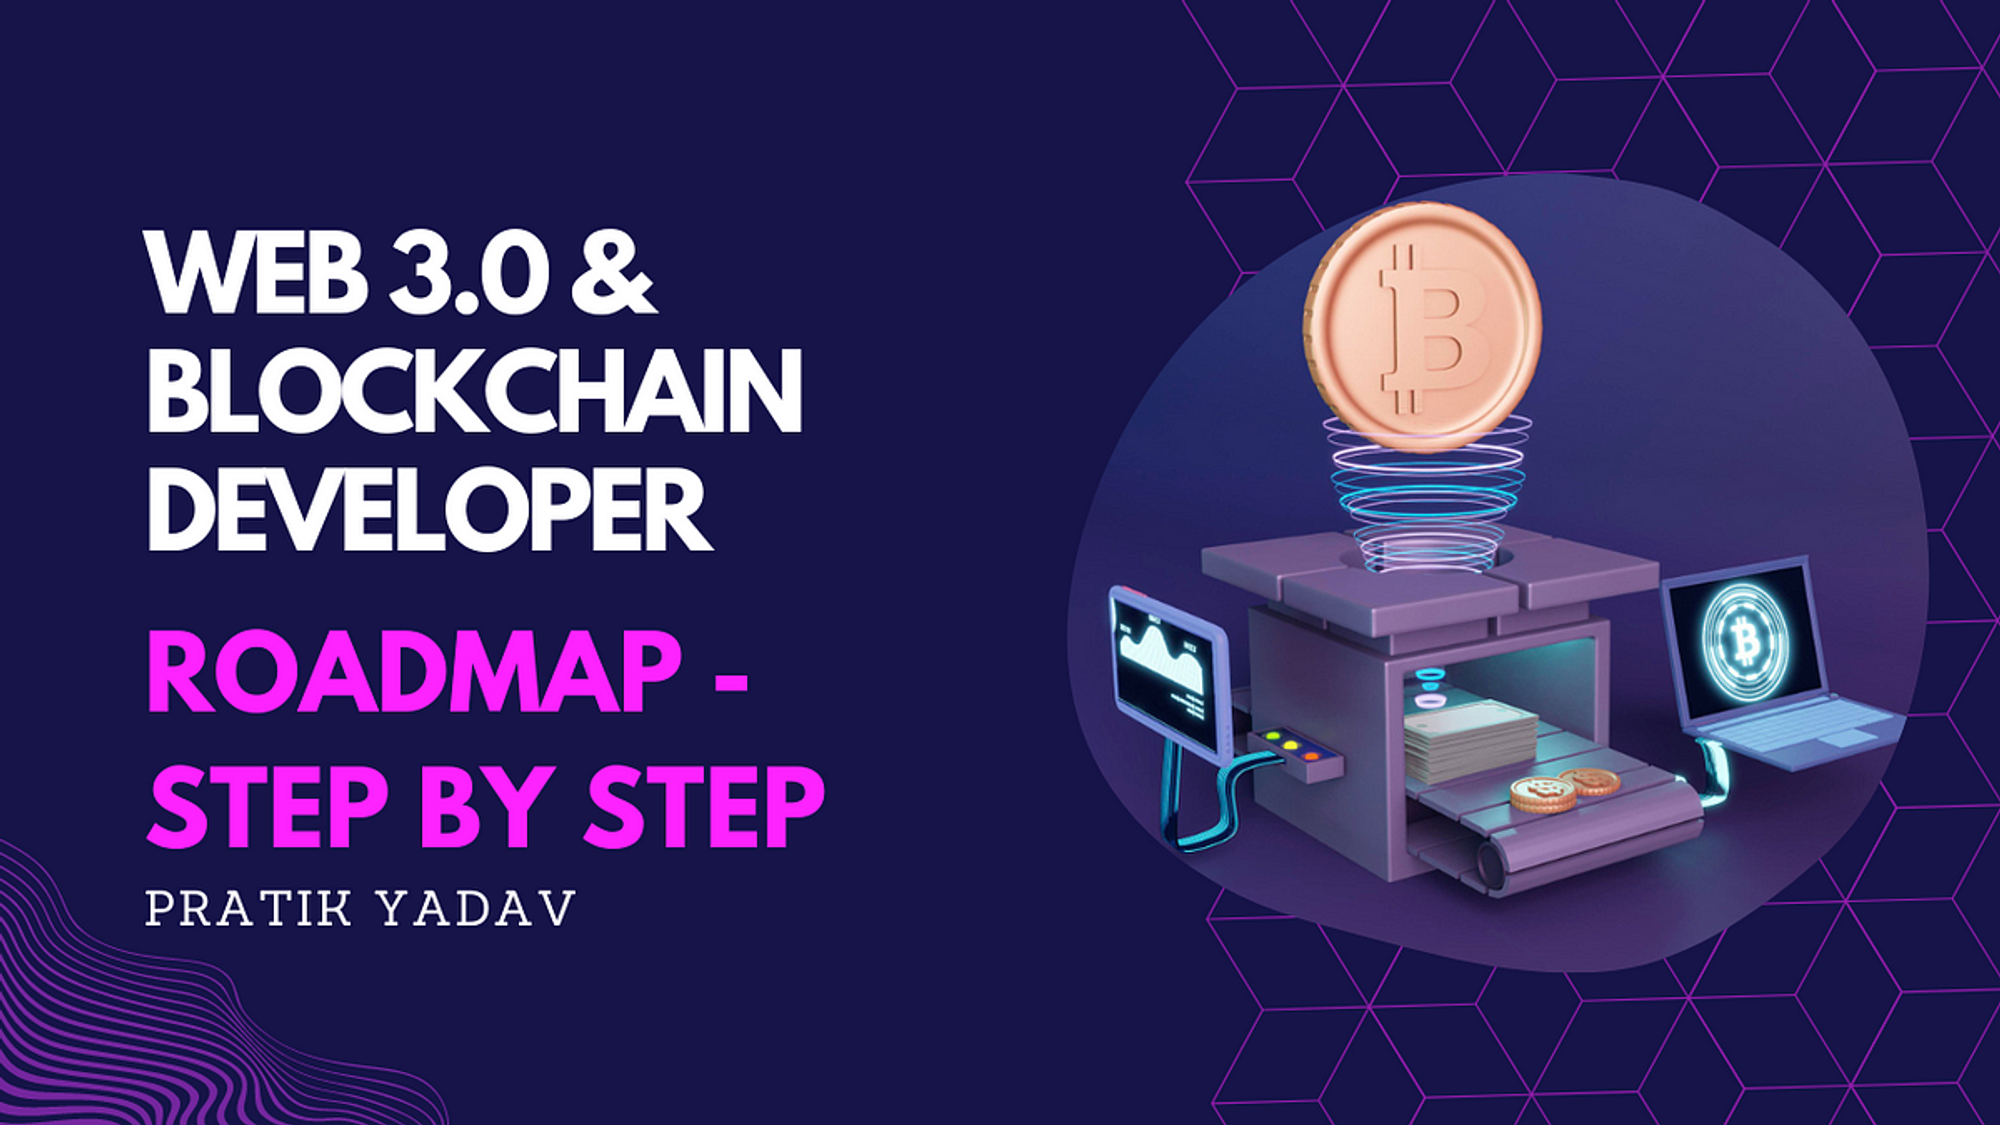 Web 3.0 & Blockchain Developer Roadmap - Step by Step